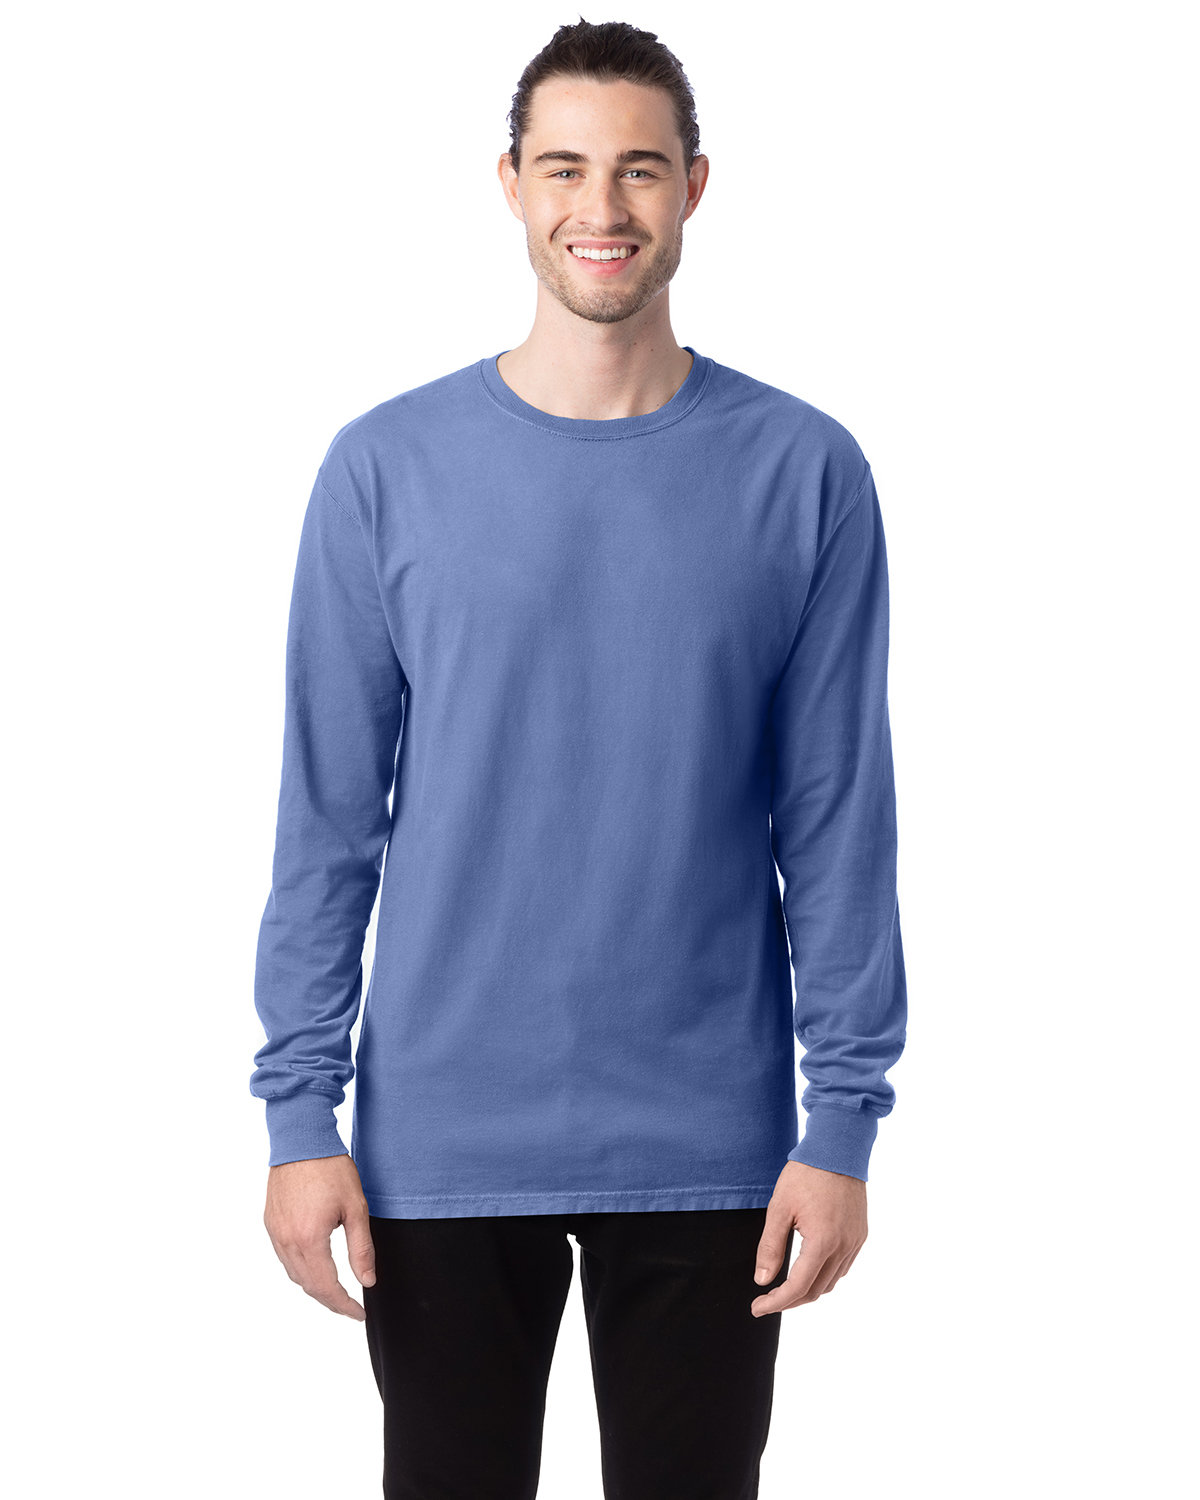 by ComfortWash ShirtSpace 100% T-Shirt 5.5 GDH200 Cotton Long-Sleeve Unisex Ringspun oz., Garment-Dyed | | Hanes